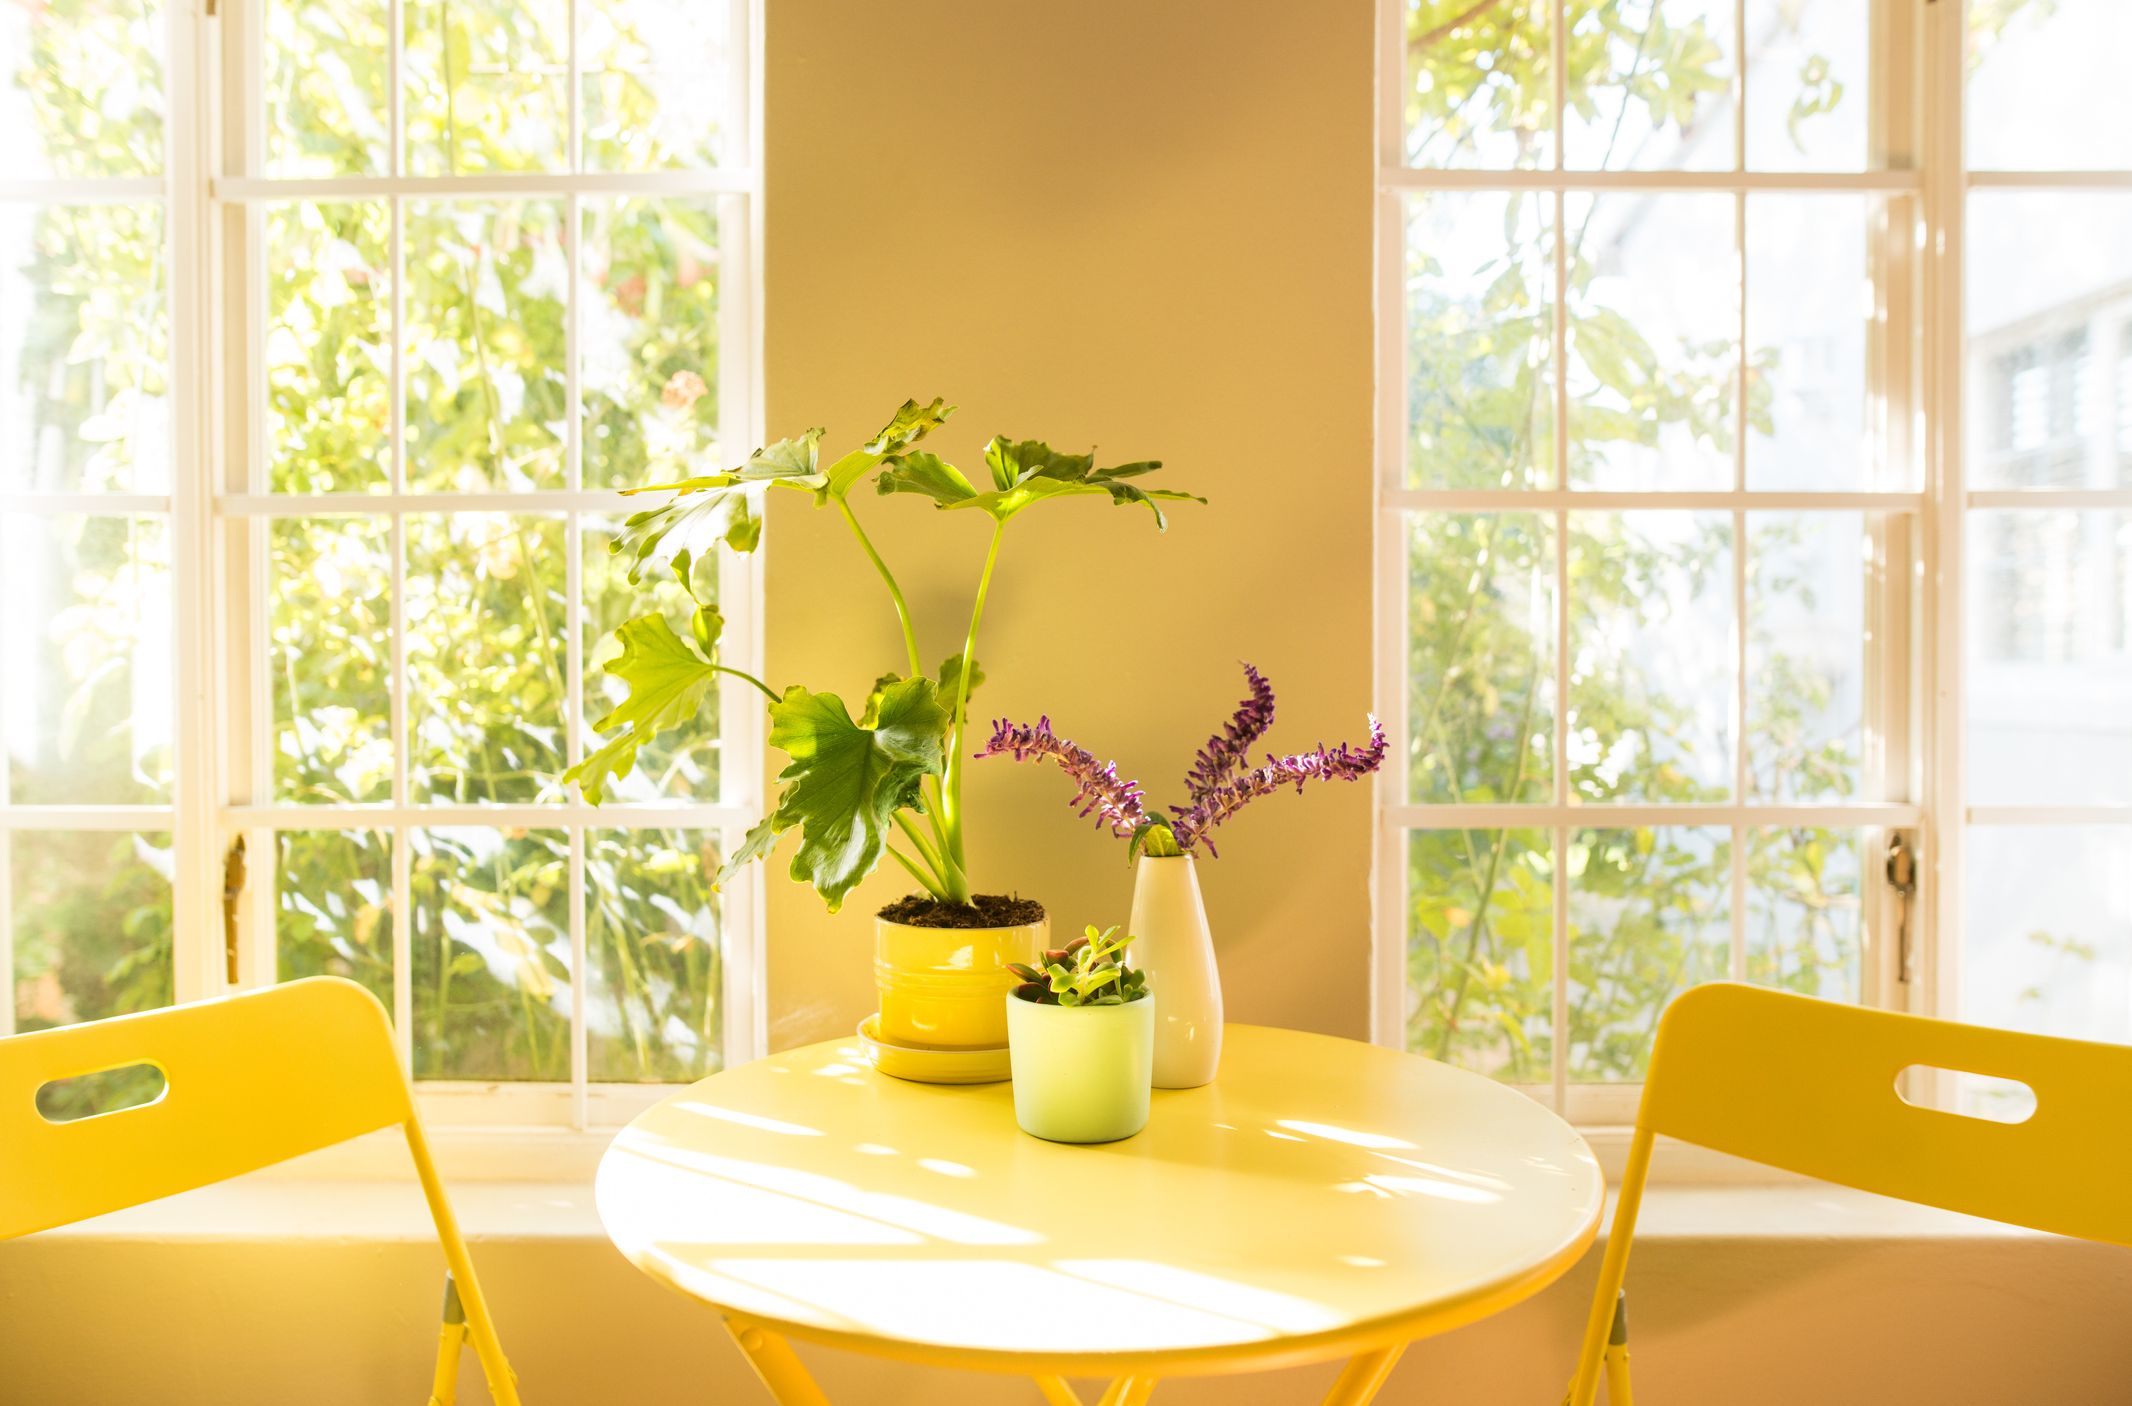 8 Benefits Of Indoor Plants How Houseplants Improve Your Health,2 Bedroom 700 Square Foot House Plans